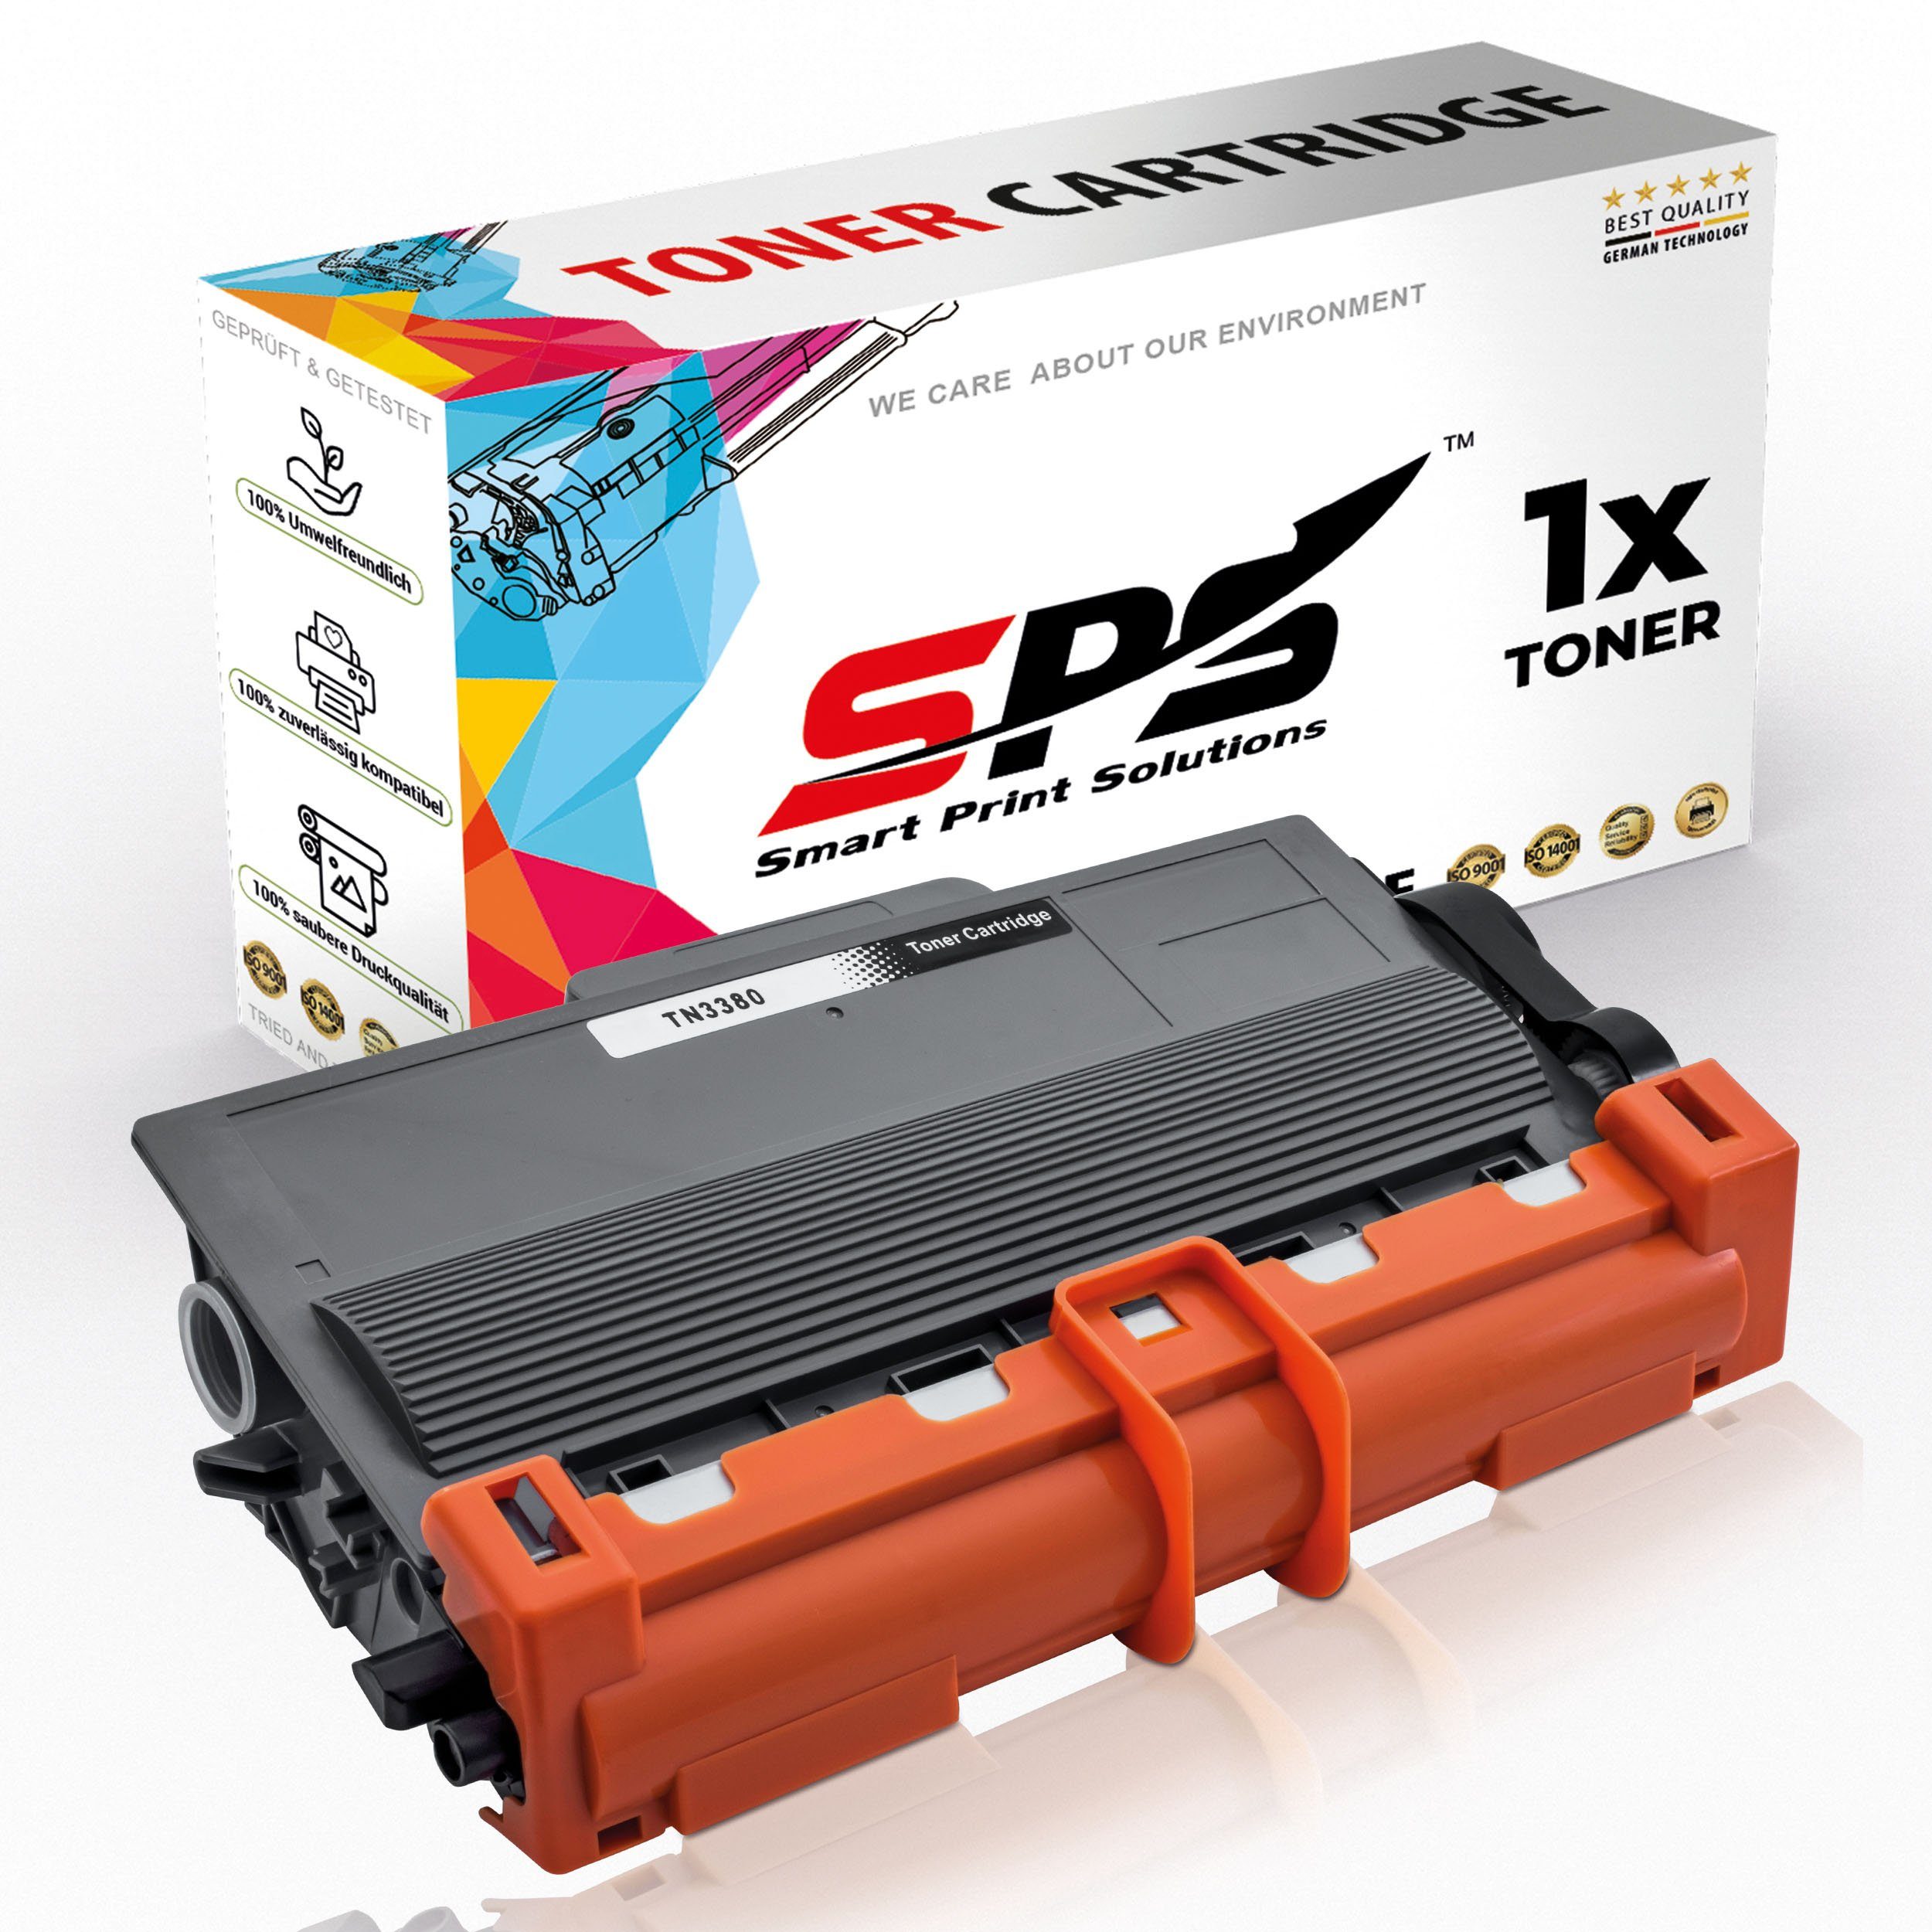 SPS Tonerkartusche Kompatibel für Brother DCP-8010DN TN-3380, (1er Pack) | Tonerpatronen